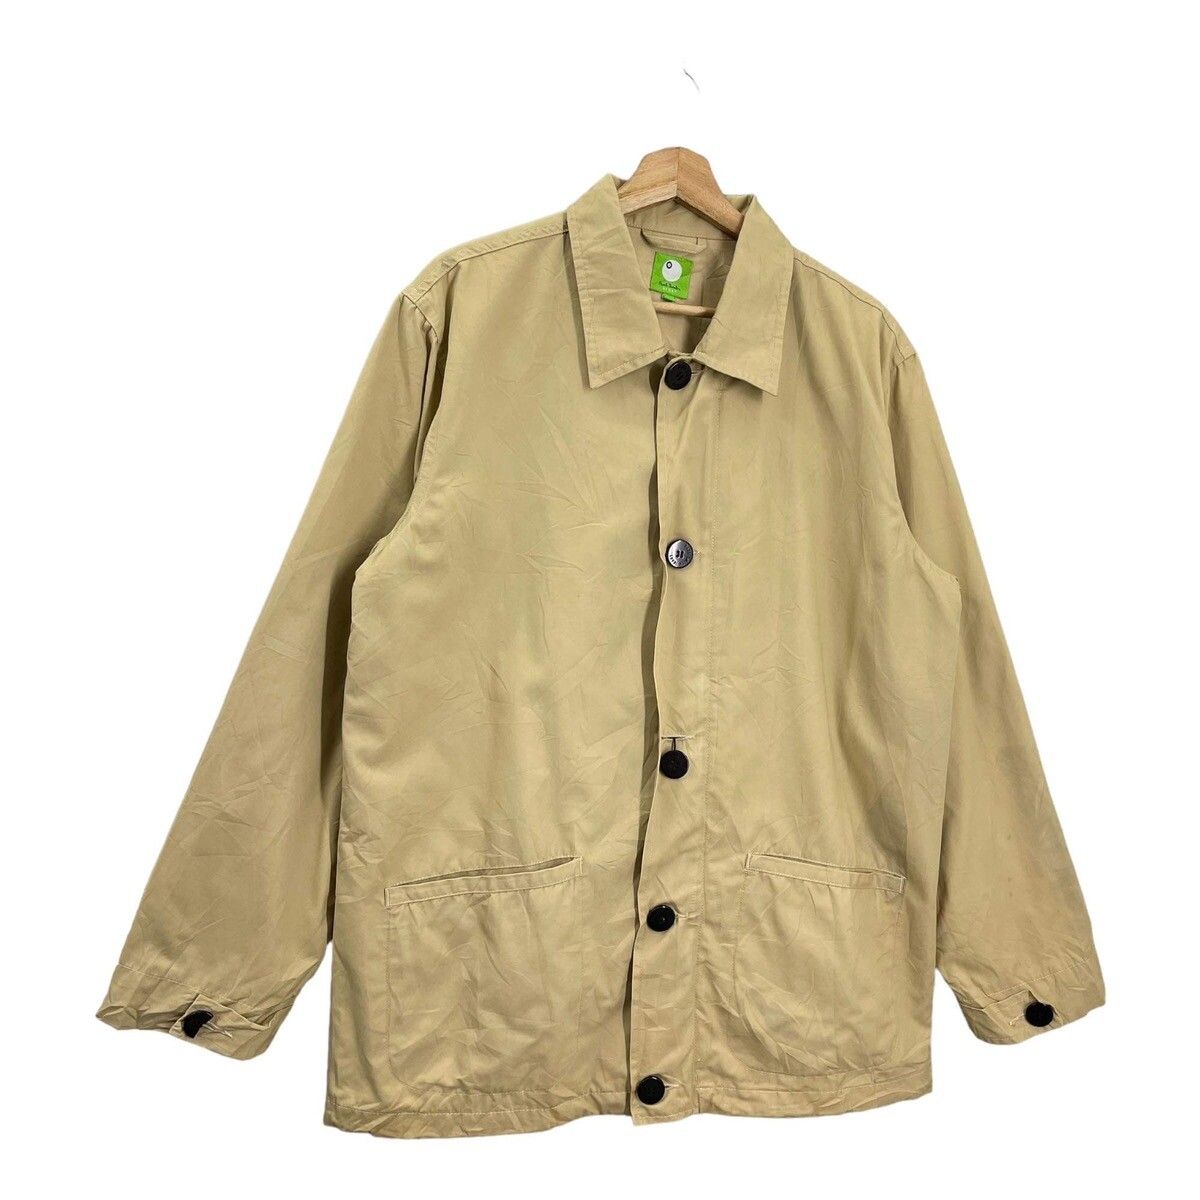 Paul Smith Button Jacket Size M - 2